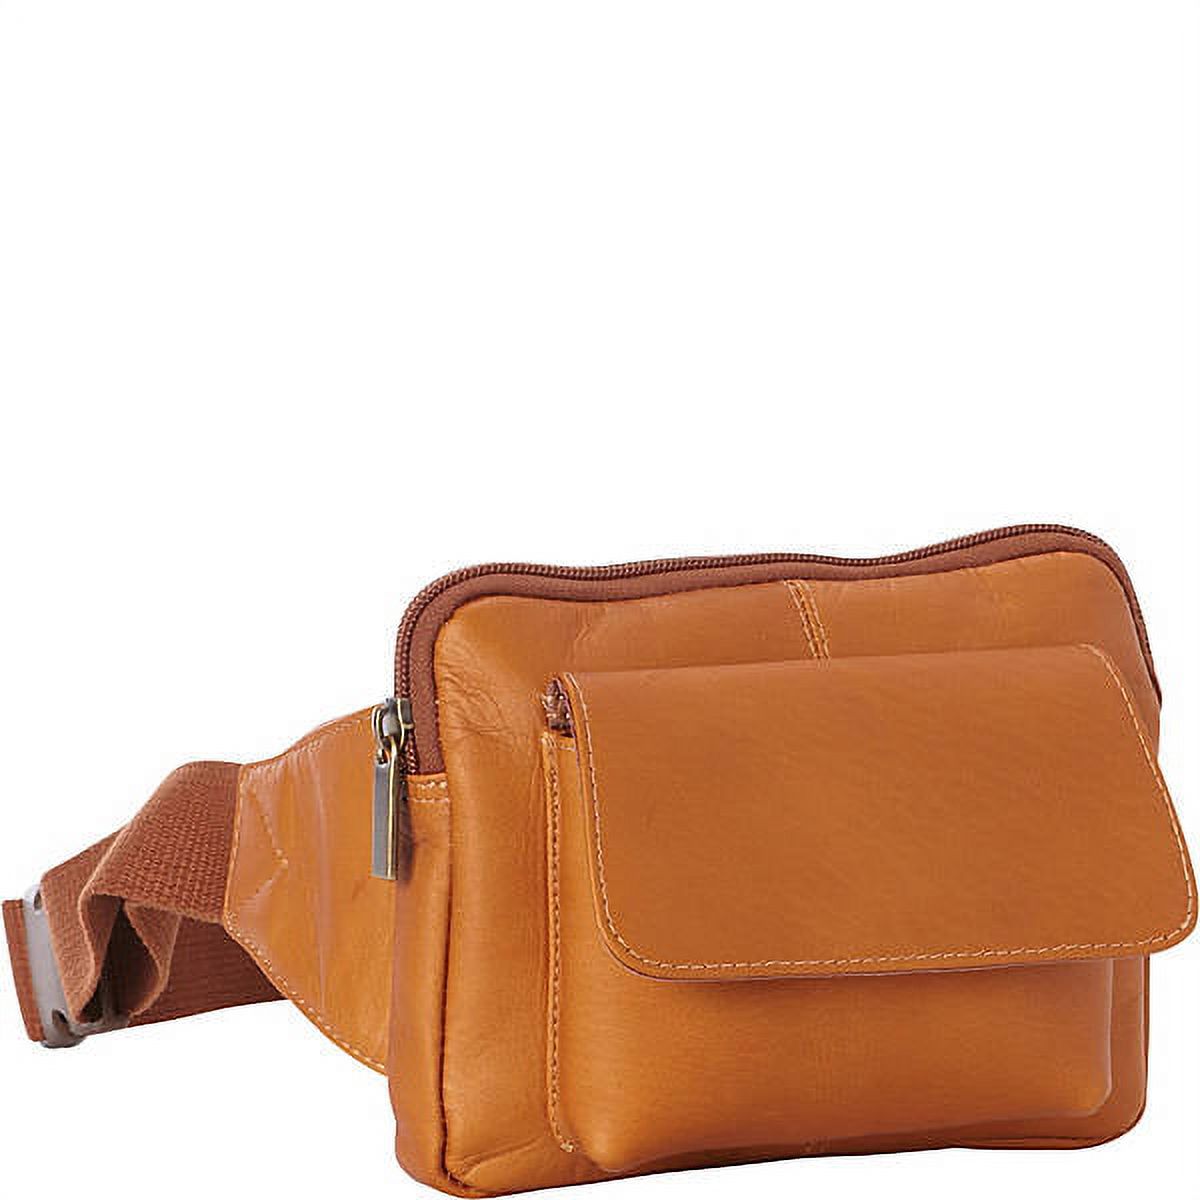 Le Donne Leather Journey Waist Bag LD-9880 - image 1 of 2